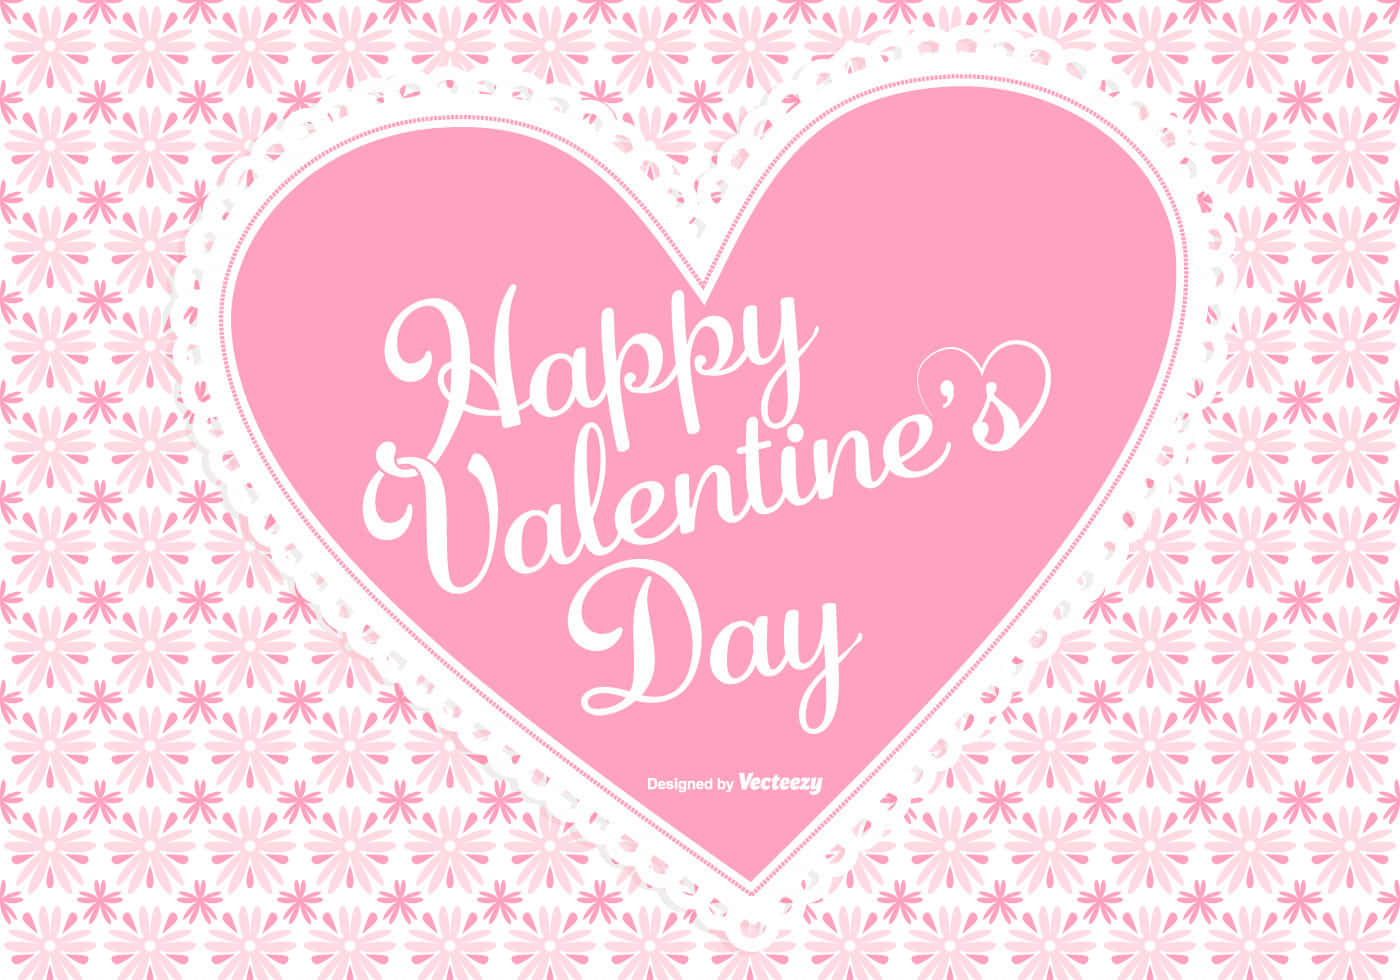 “Wishing you a Happy Valentine’s Day!”